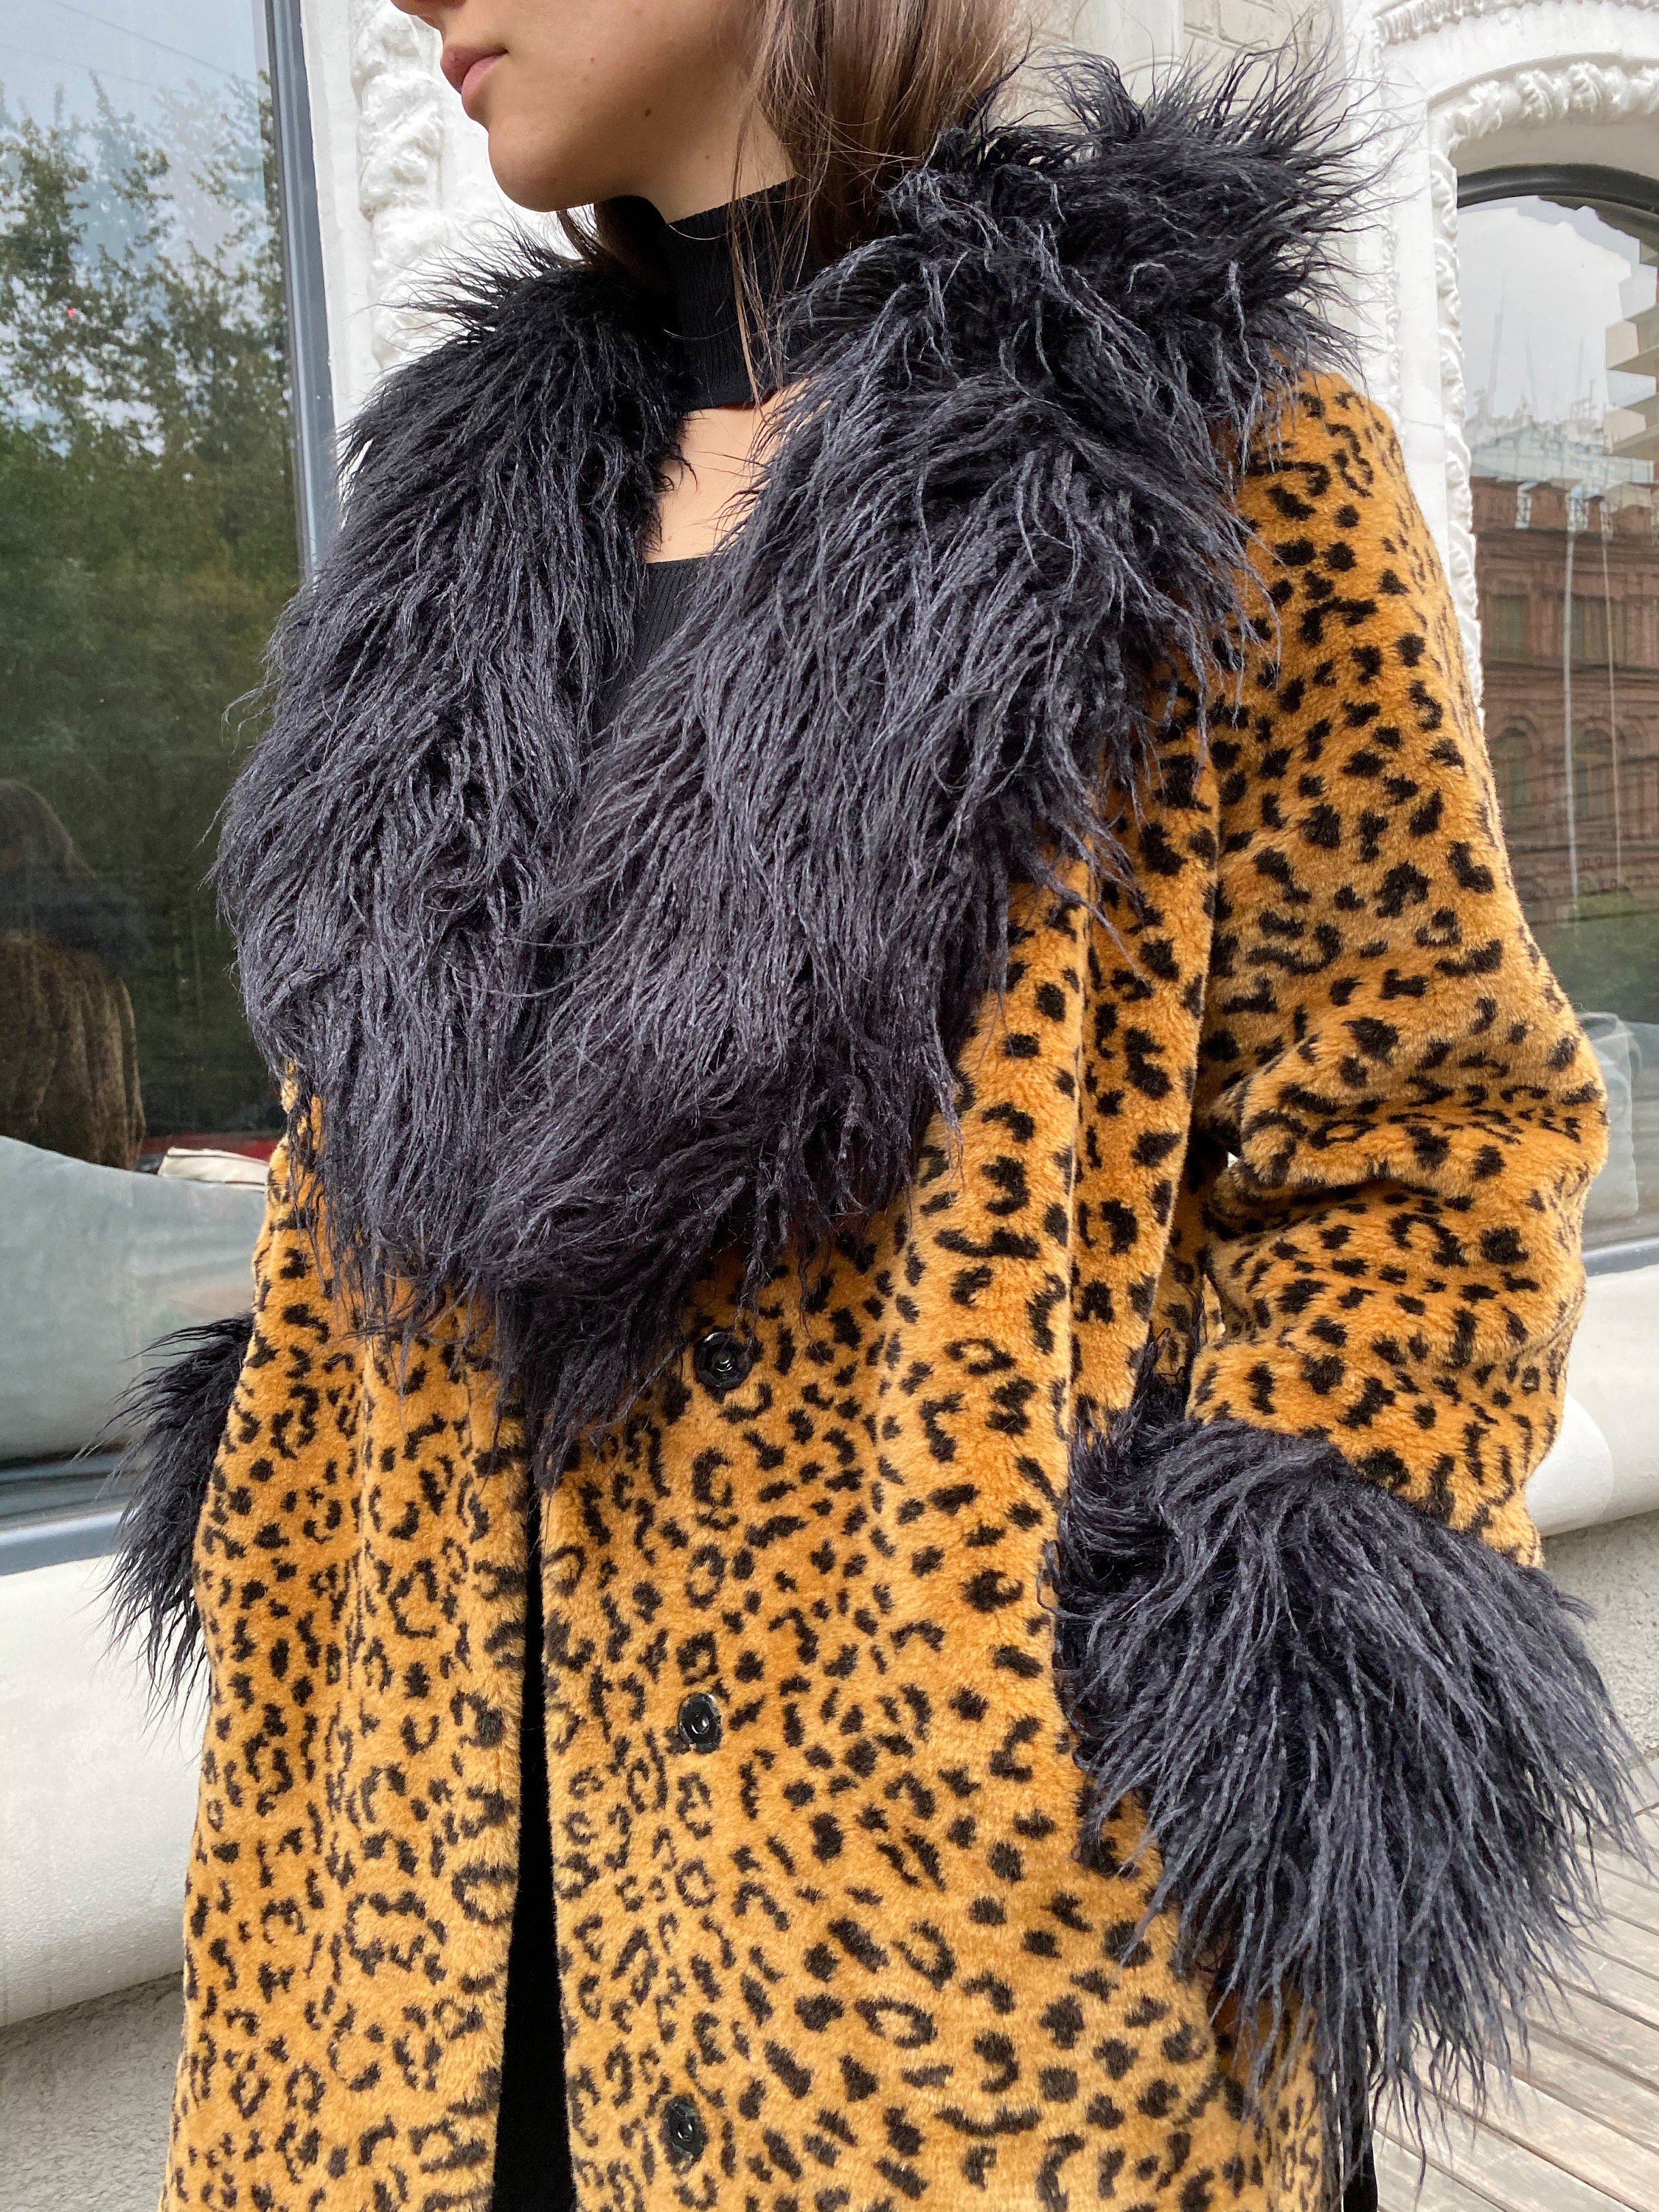 Leopard Print Faux Fur Coat for Women Animal Print Full - Etsy